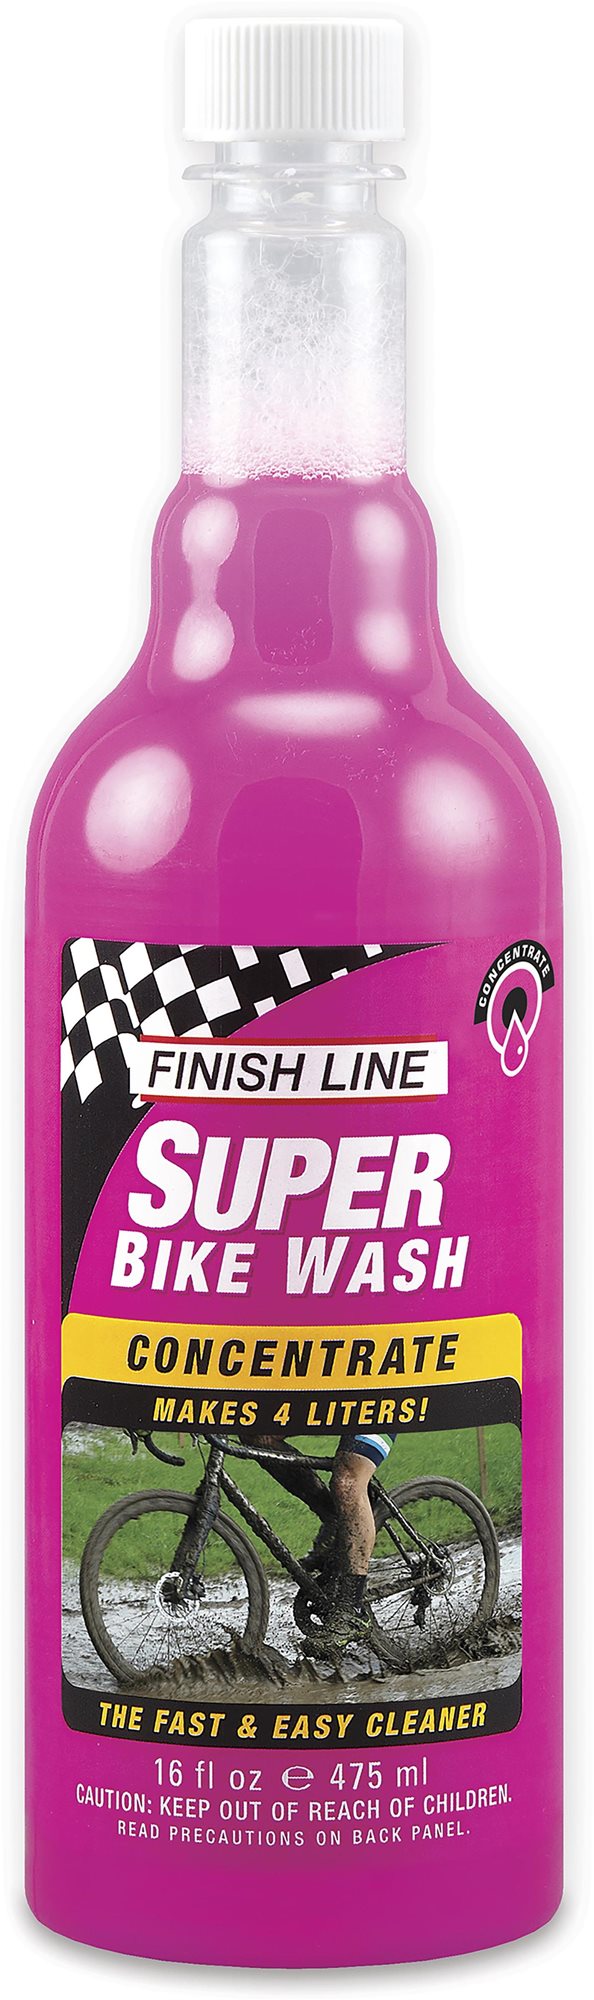 Tisztító Finish Line Bike Wash Koncentrátum 475 ml